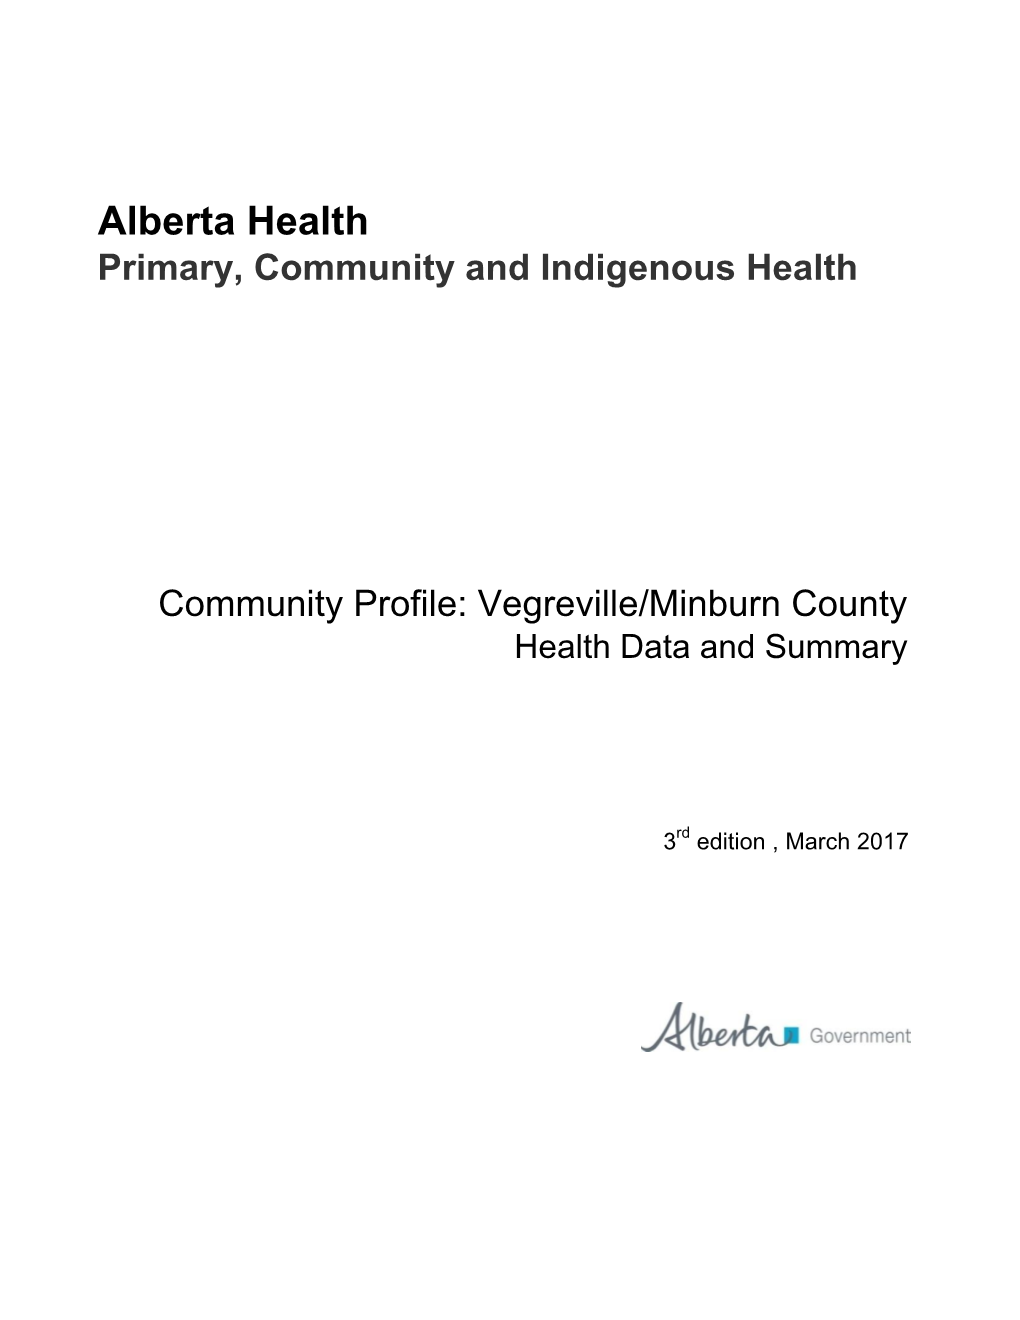 Vegreville -Minburn County Alberta 8.3 Asthma 26.9 Age-Standardized IP Sep Rates (Per 100,000 Population)